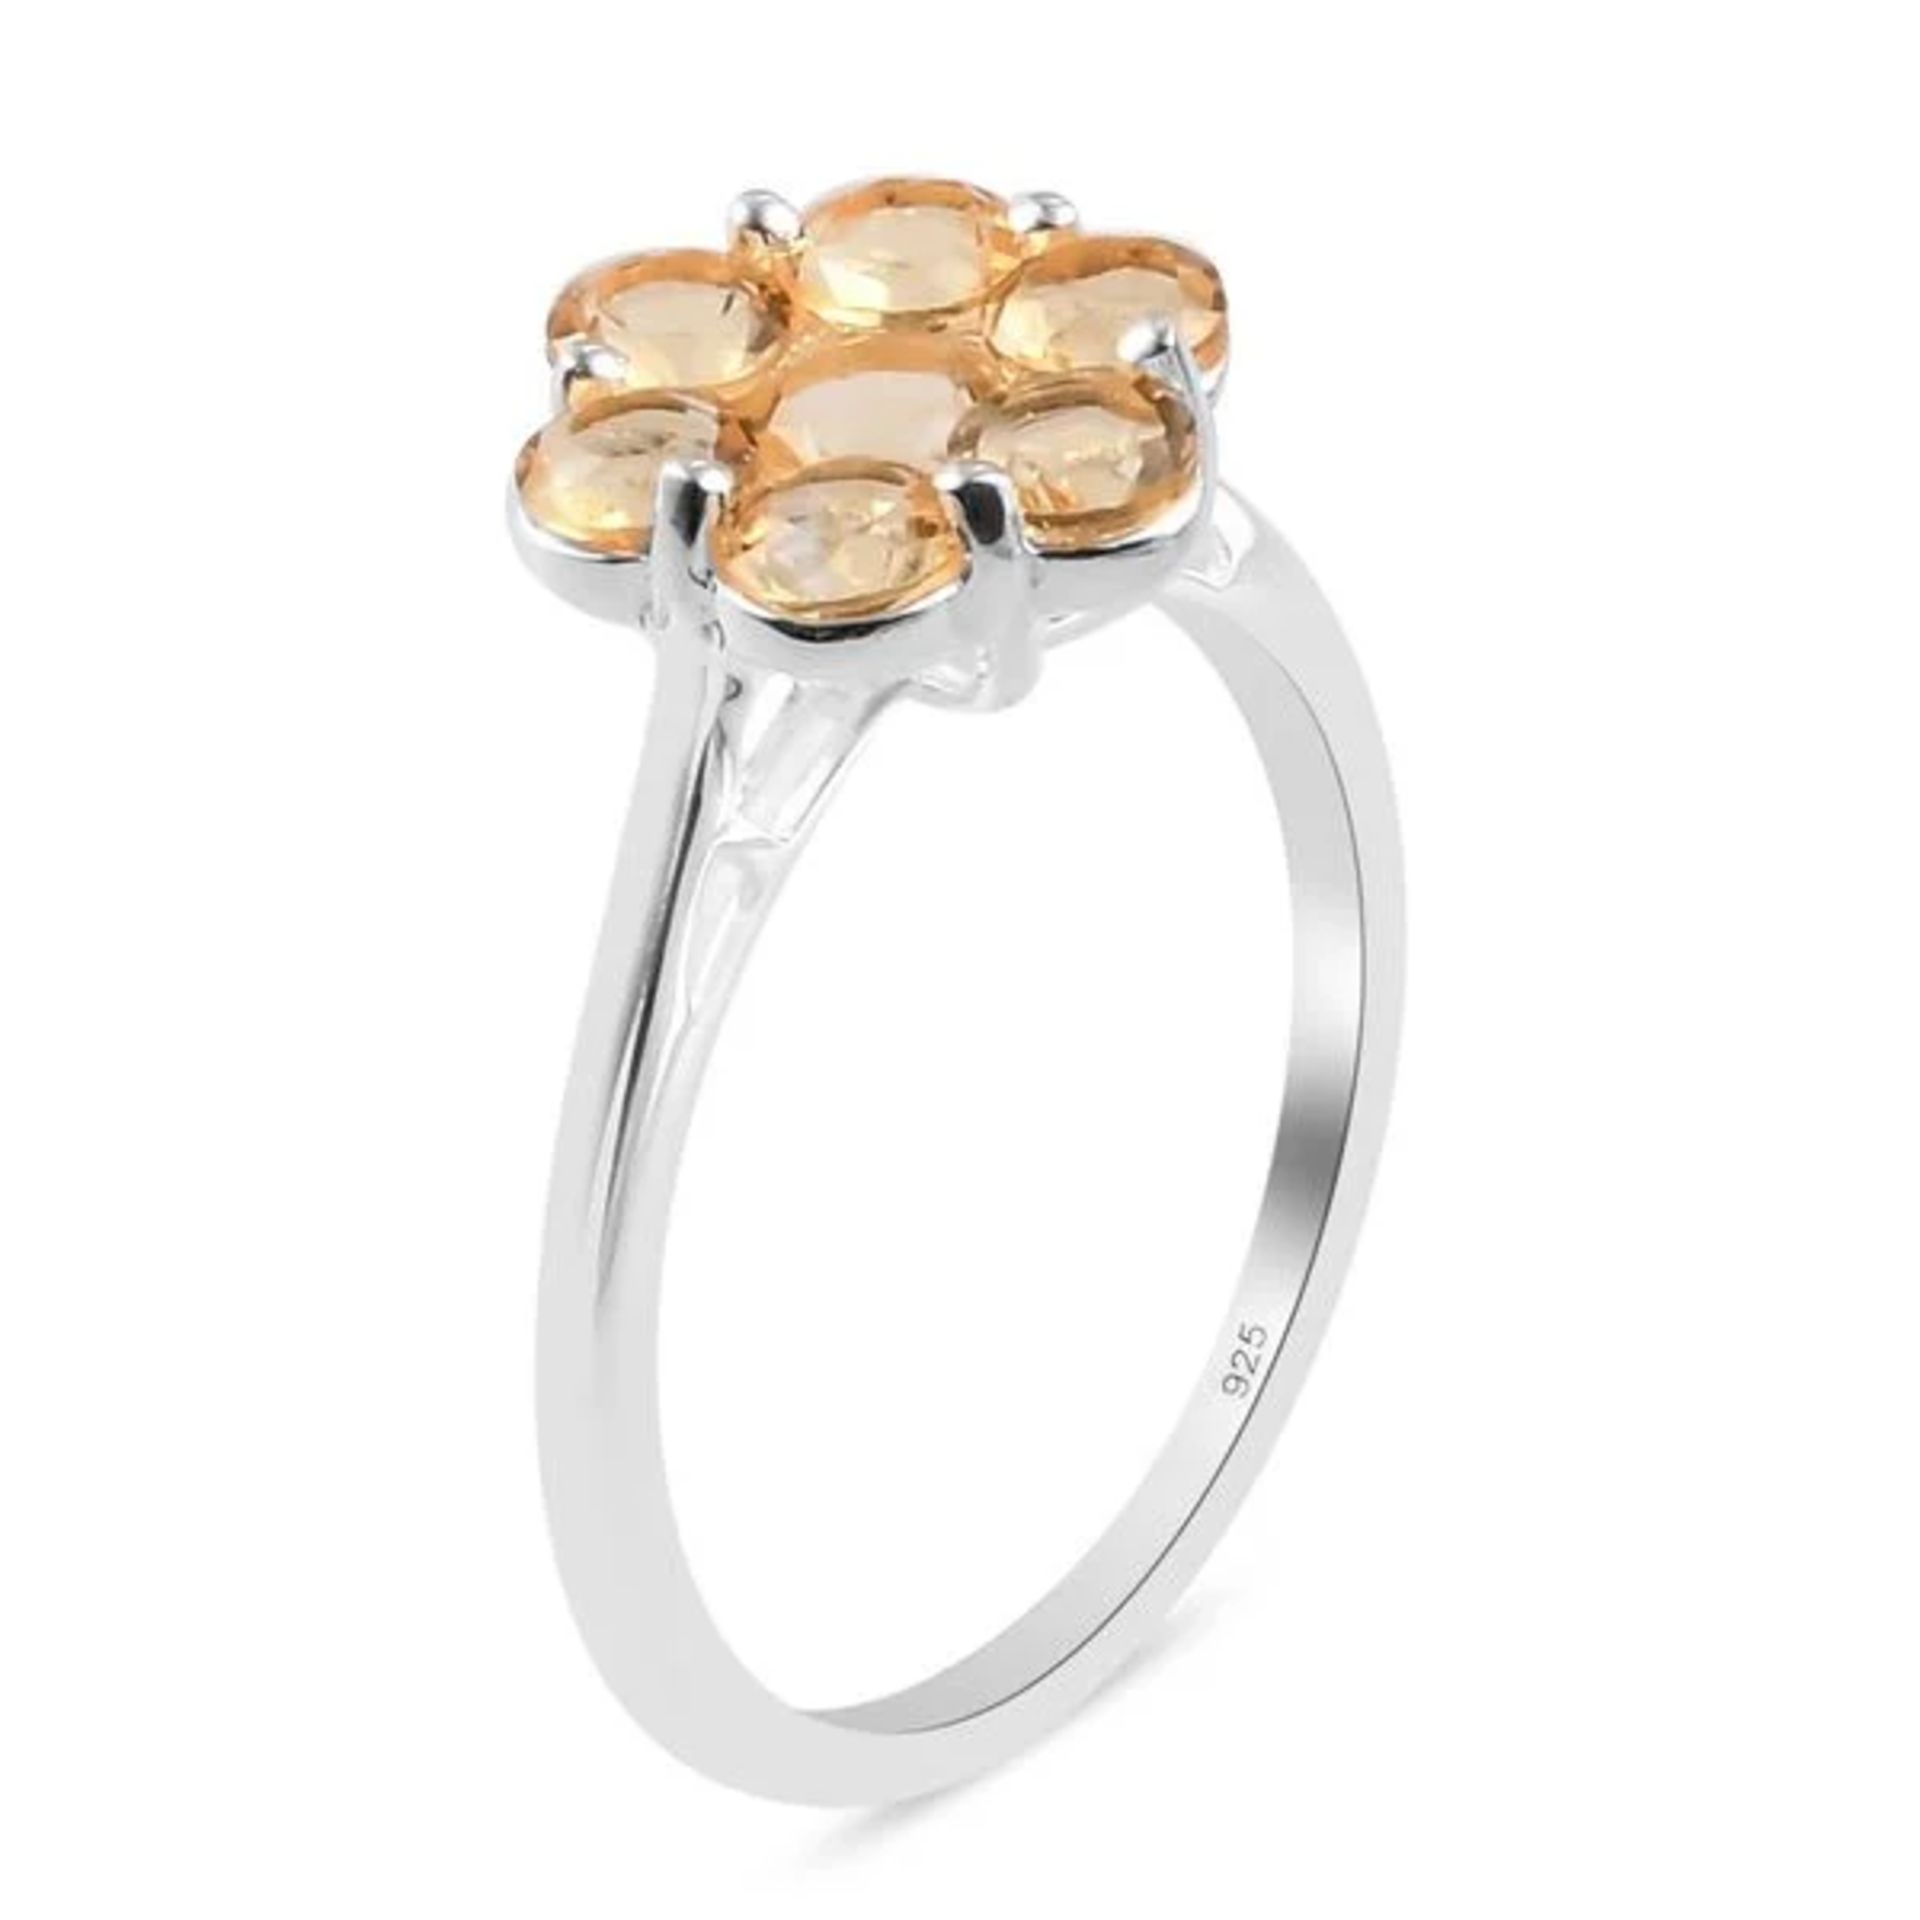 New! Citrine Floral Cluster Ring, Earrings & Bracelet In Sterling Silver - Image 3 of 7